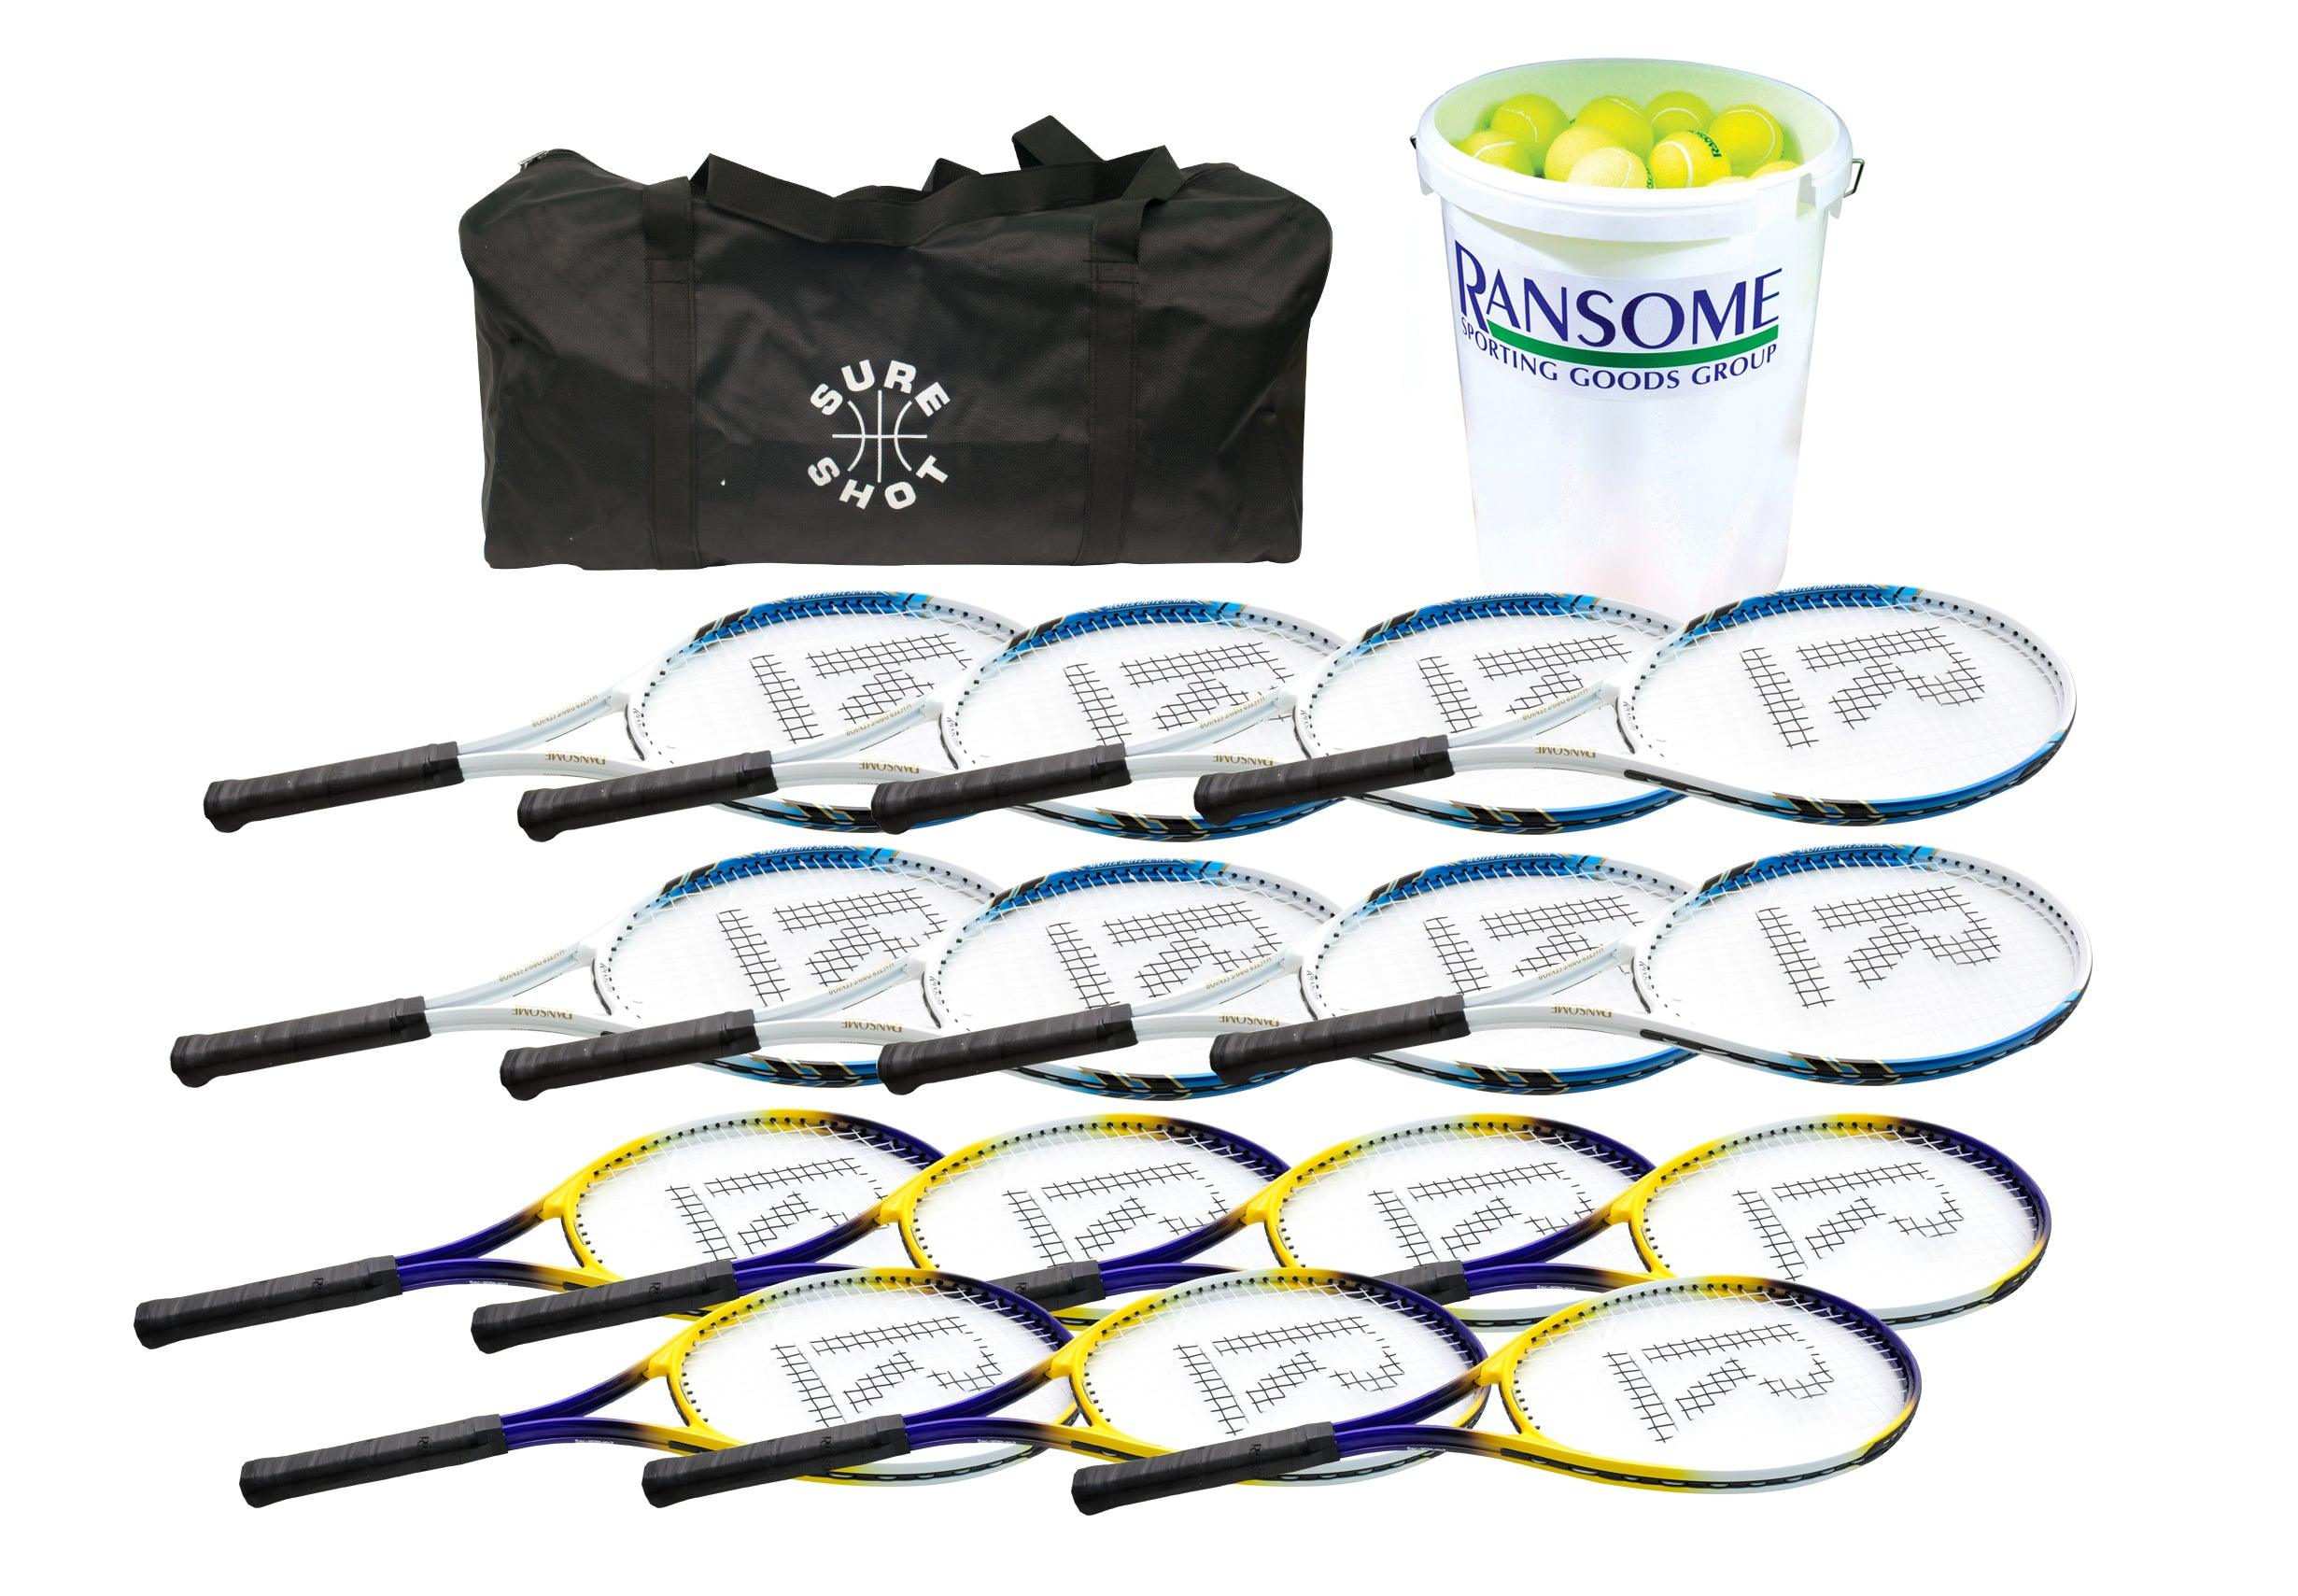 Ransome Secondary bag (15 Tennis Rackets and 96 balls) - Bassline Retail